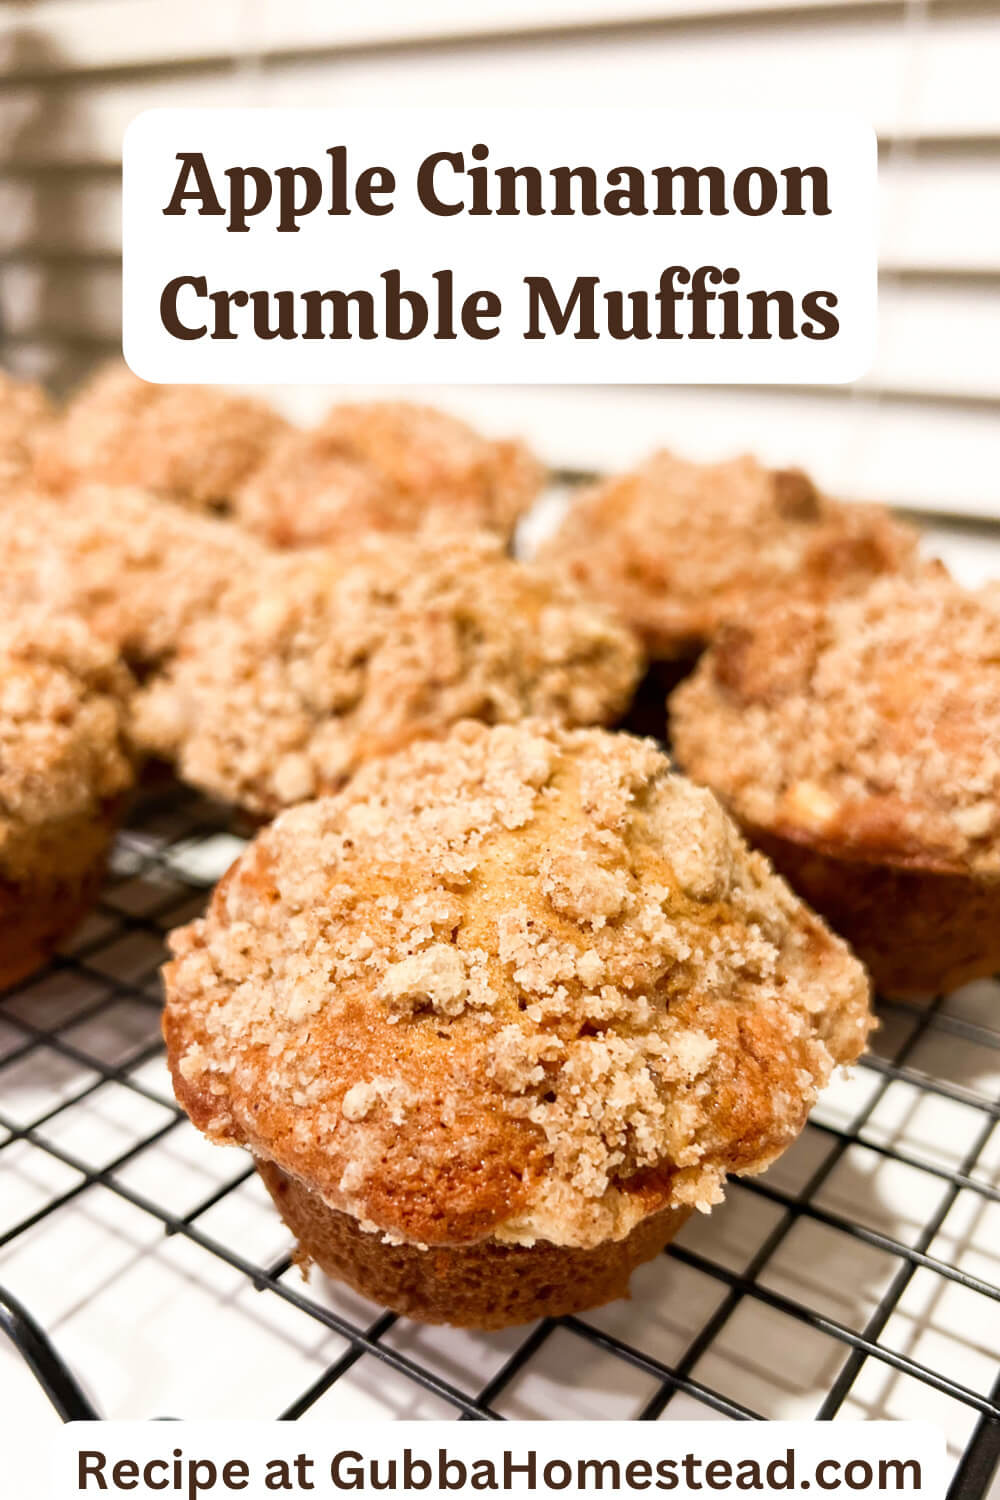 Apple Cinnamon Crumble Muffins